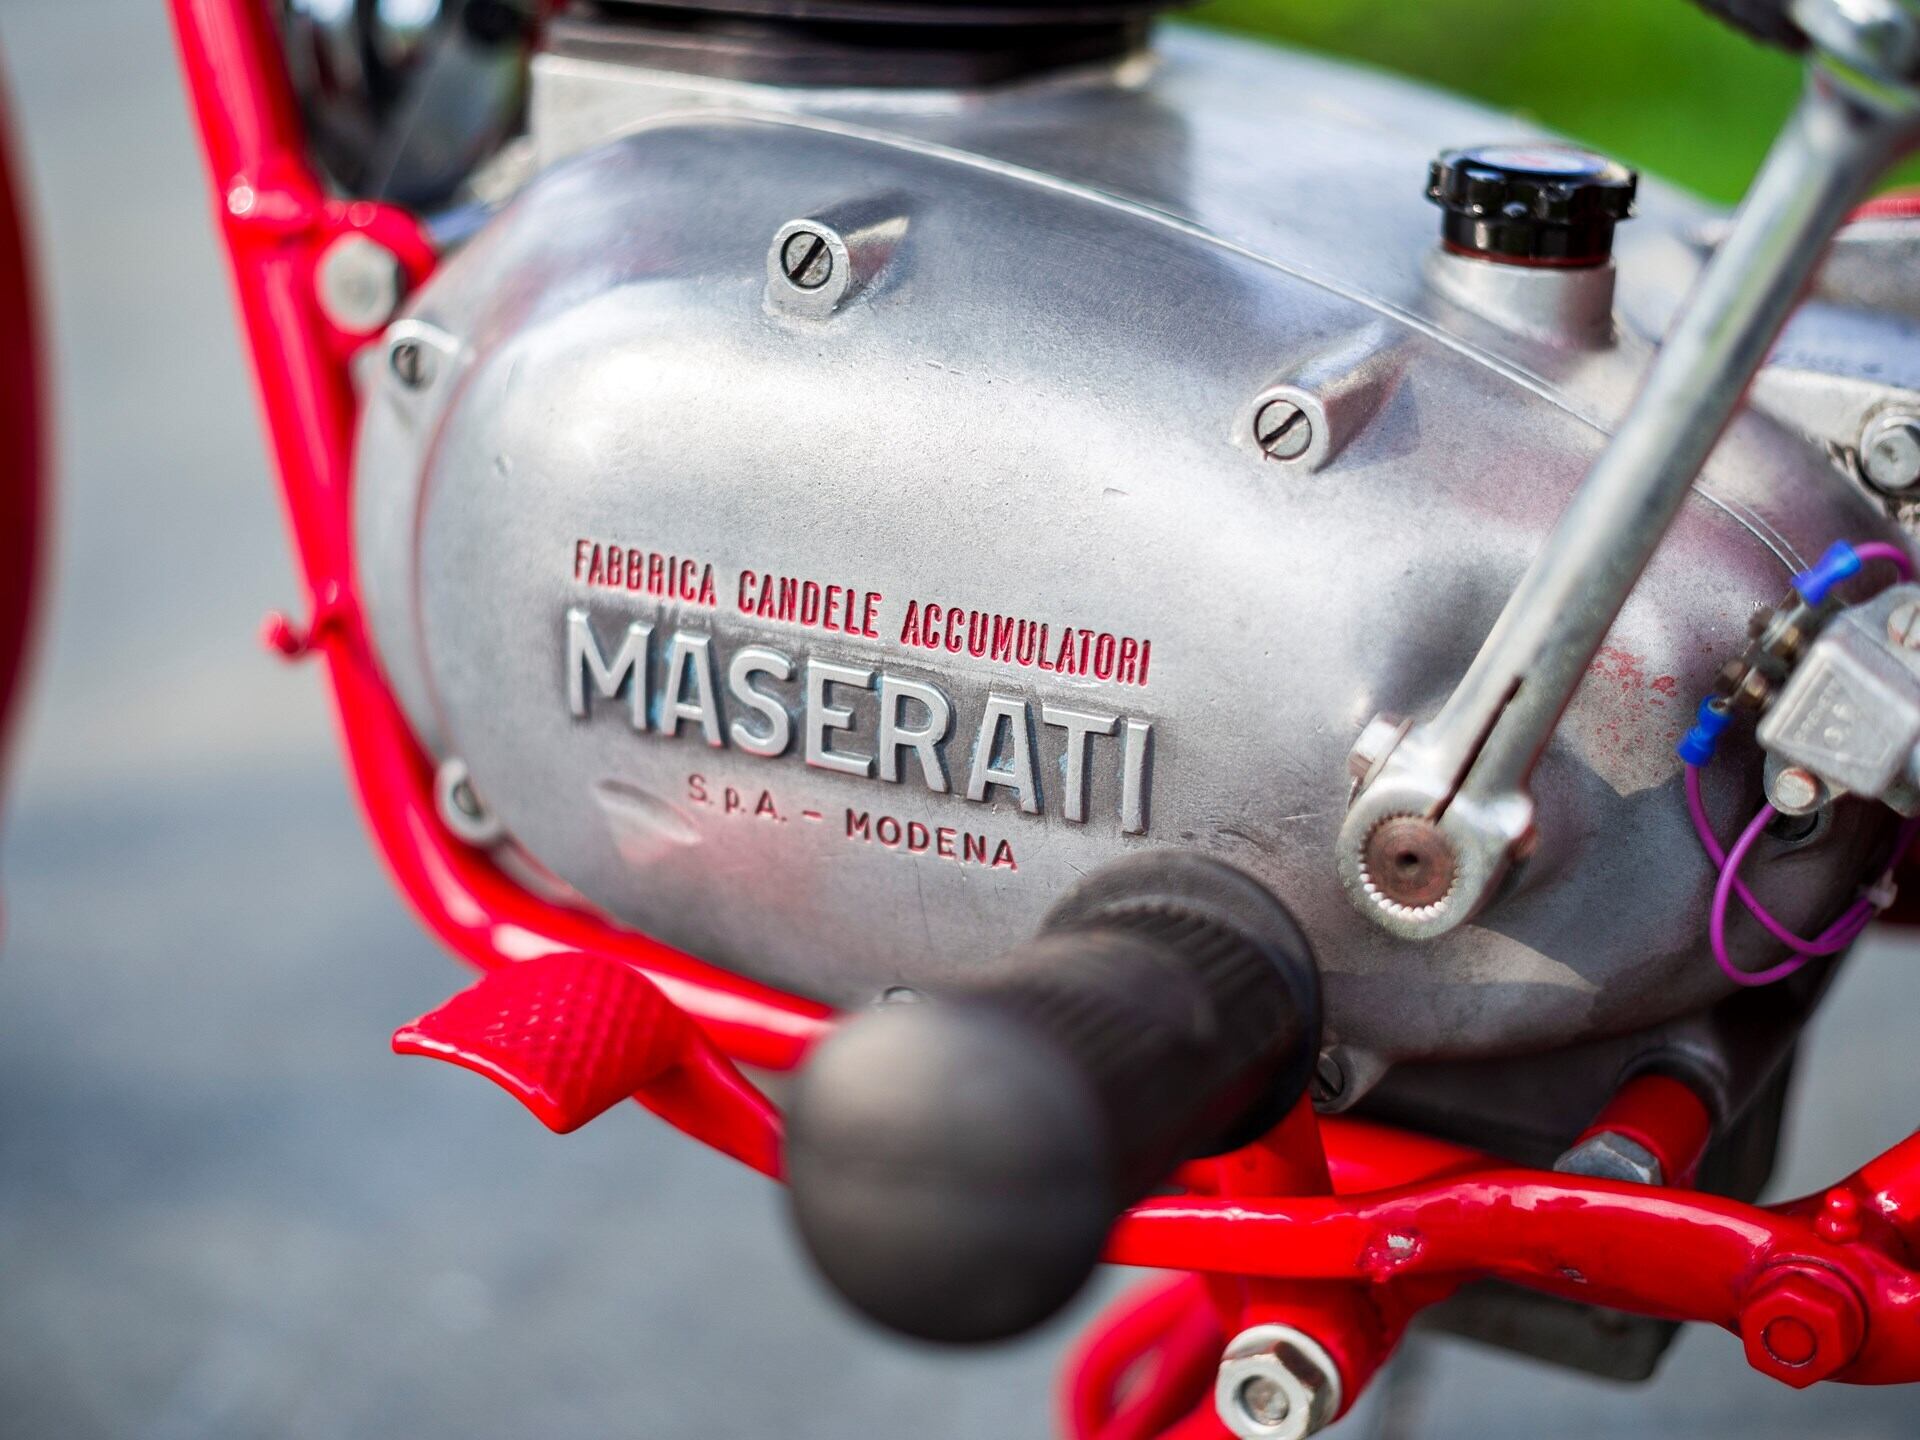 Maserati motorcycle